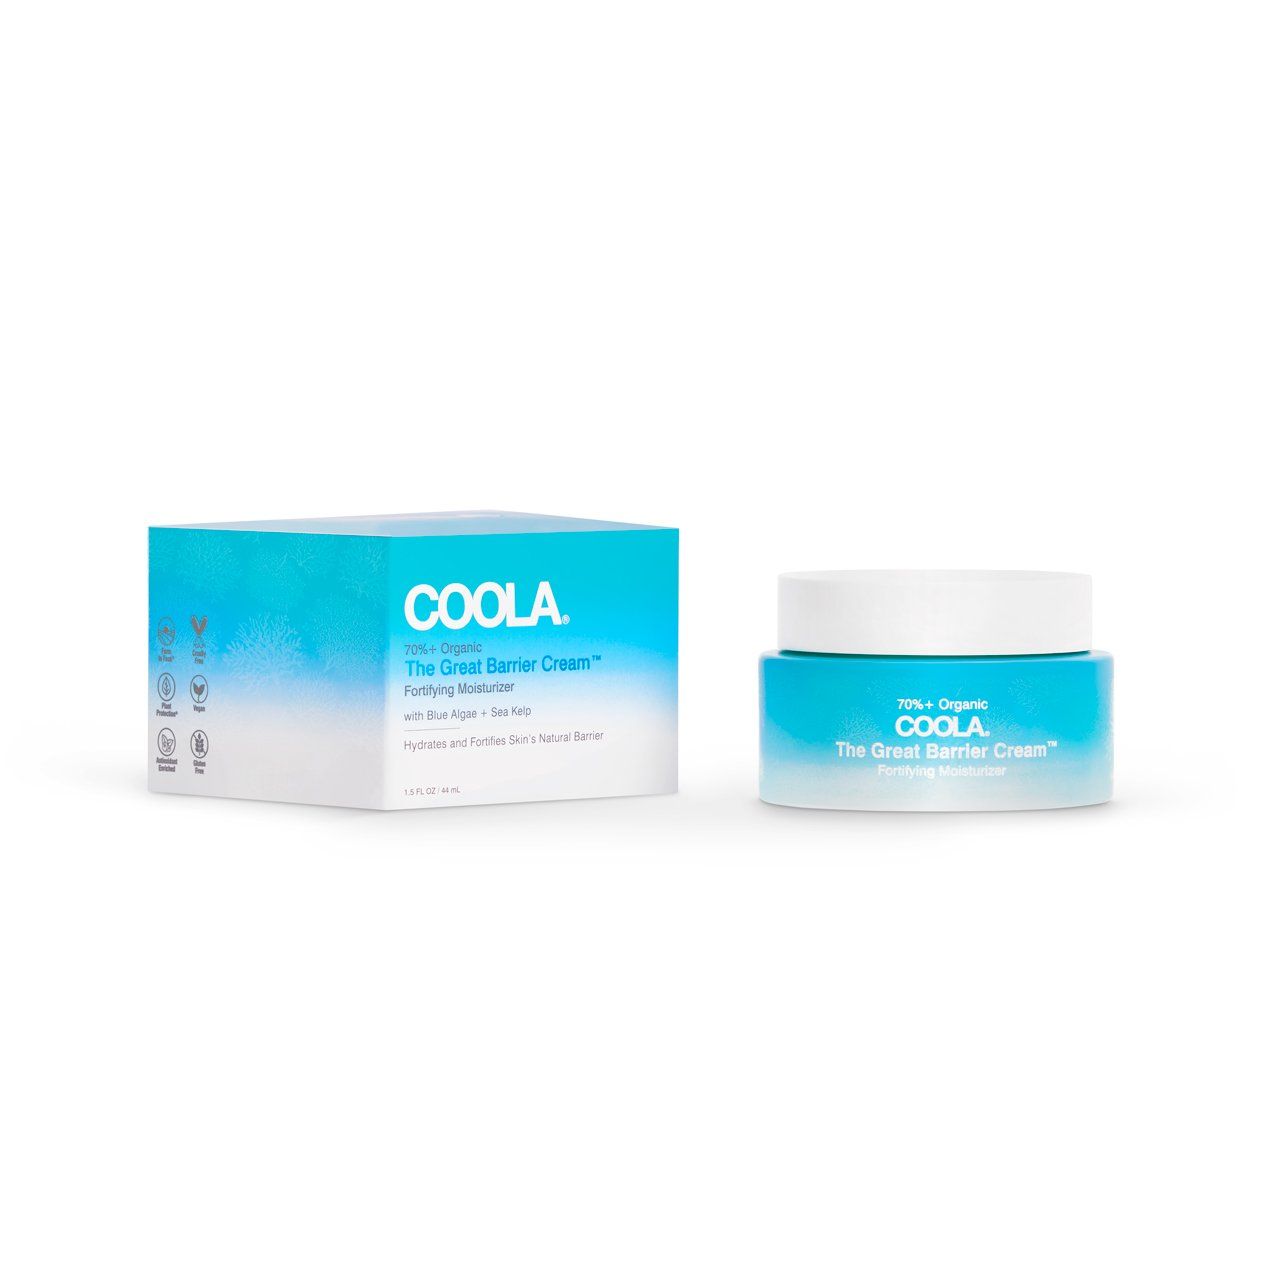 COOLA Organic The Great Barrier Cream™ Fortifying Moisturizer - 1.5 fl oz